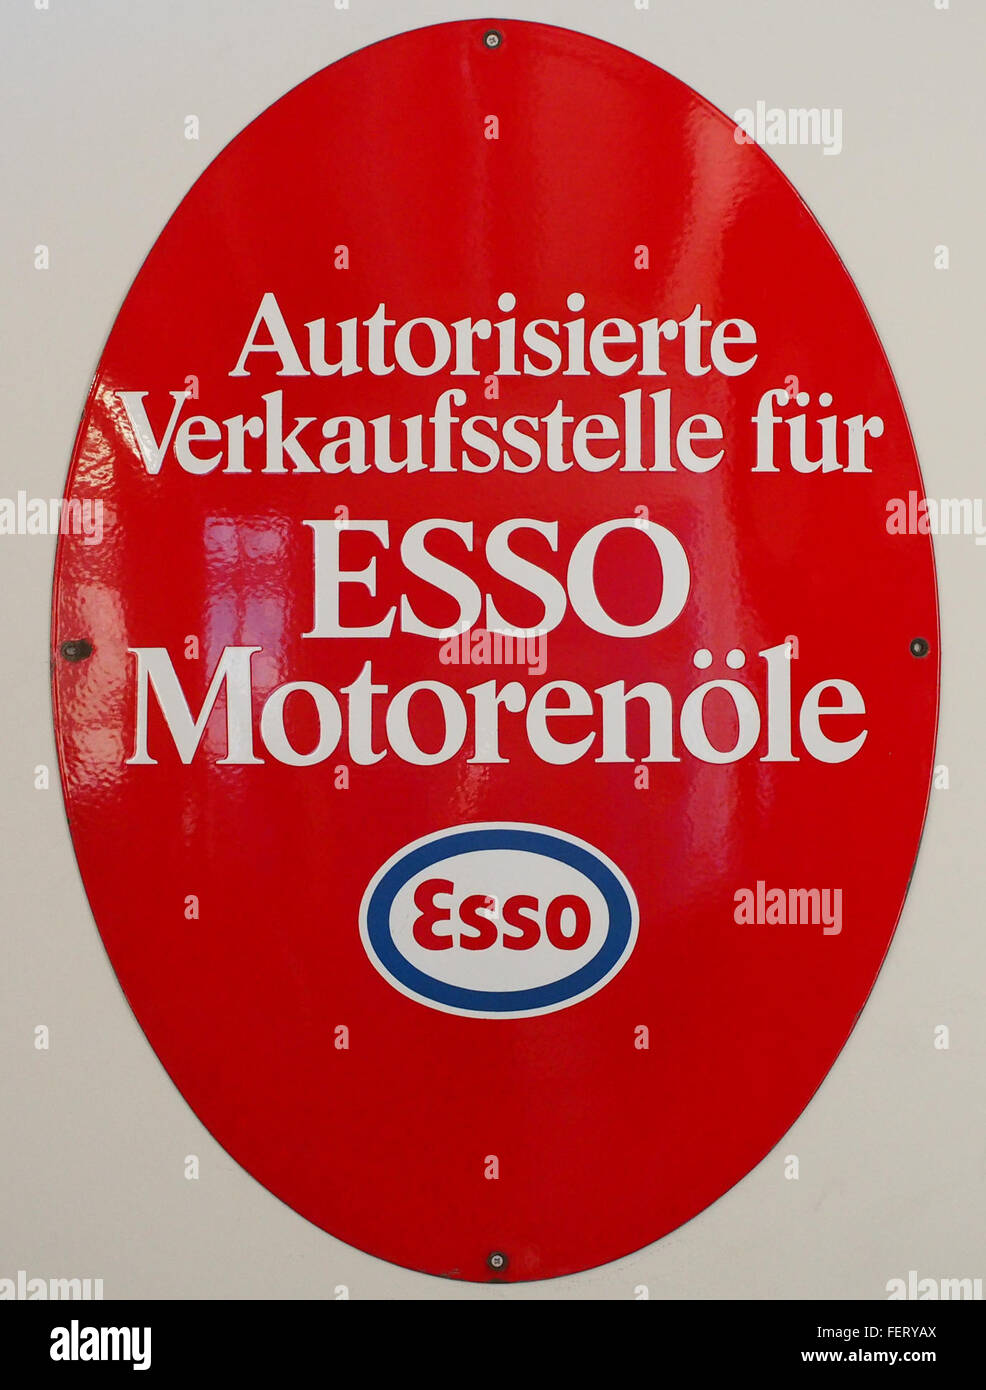 MotorenC ESSO3B6le Emaille Werbeschild Banque D'Images